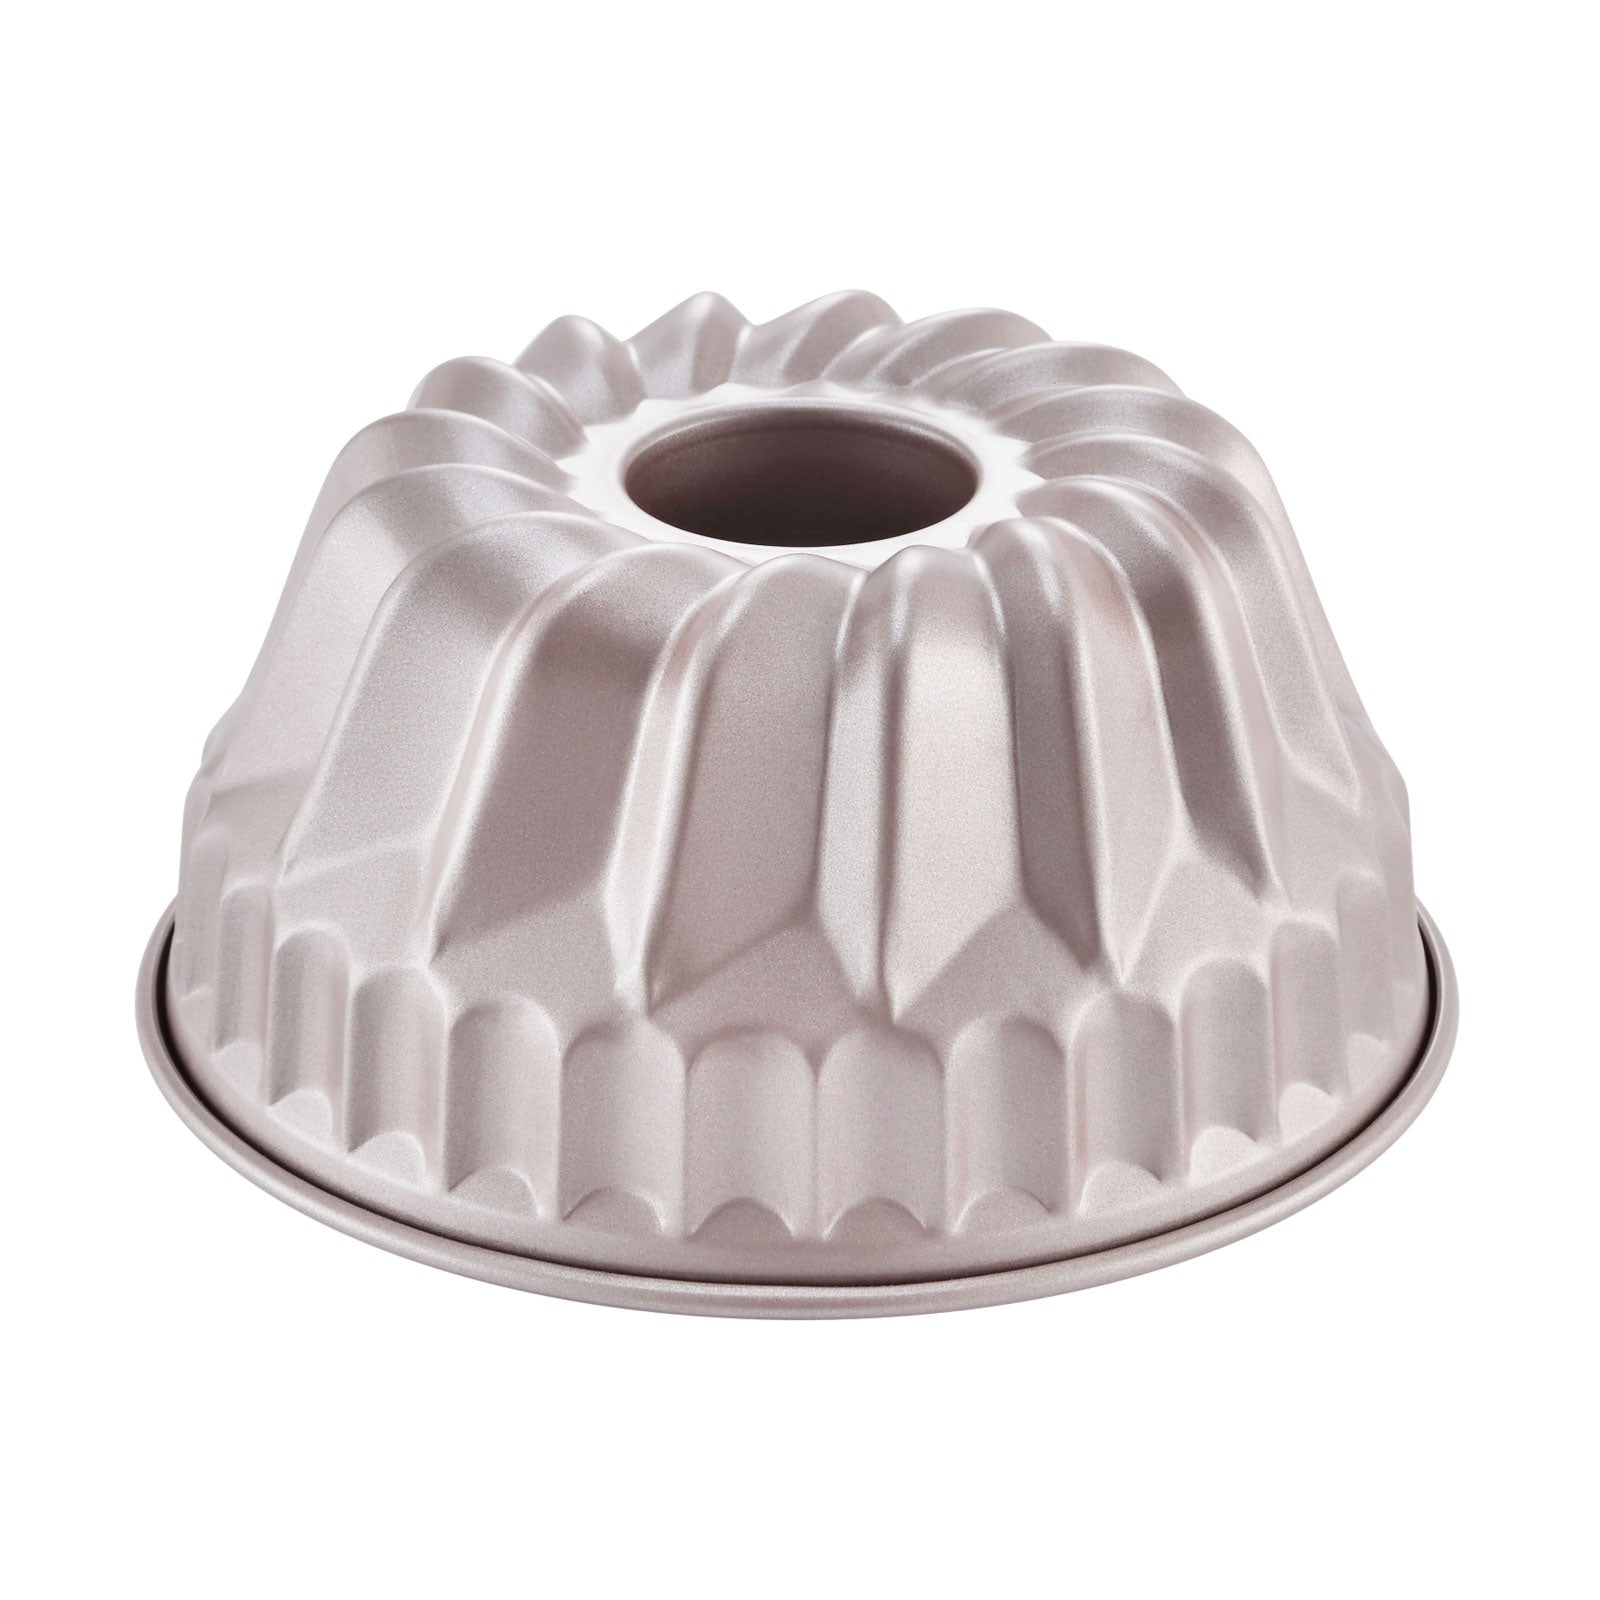 Bundt Pan Bakeware Aluminum Fiesta Party Tool Cake Mold Sculpted 6 Cup Navy  New